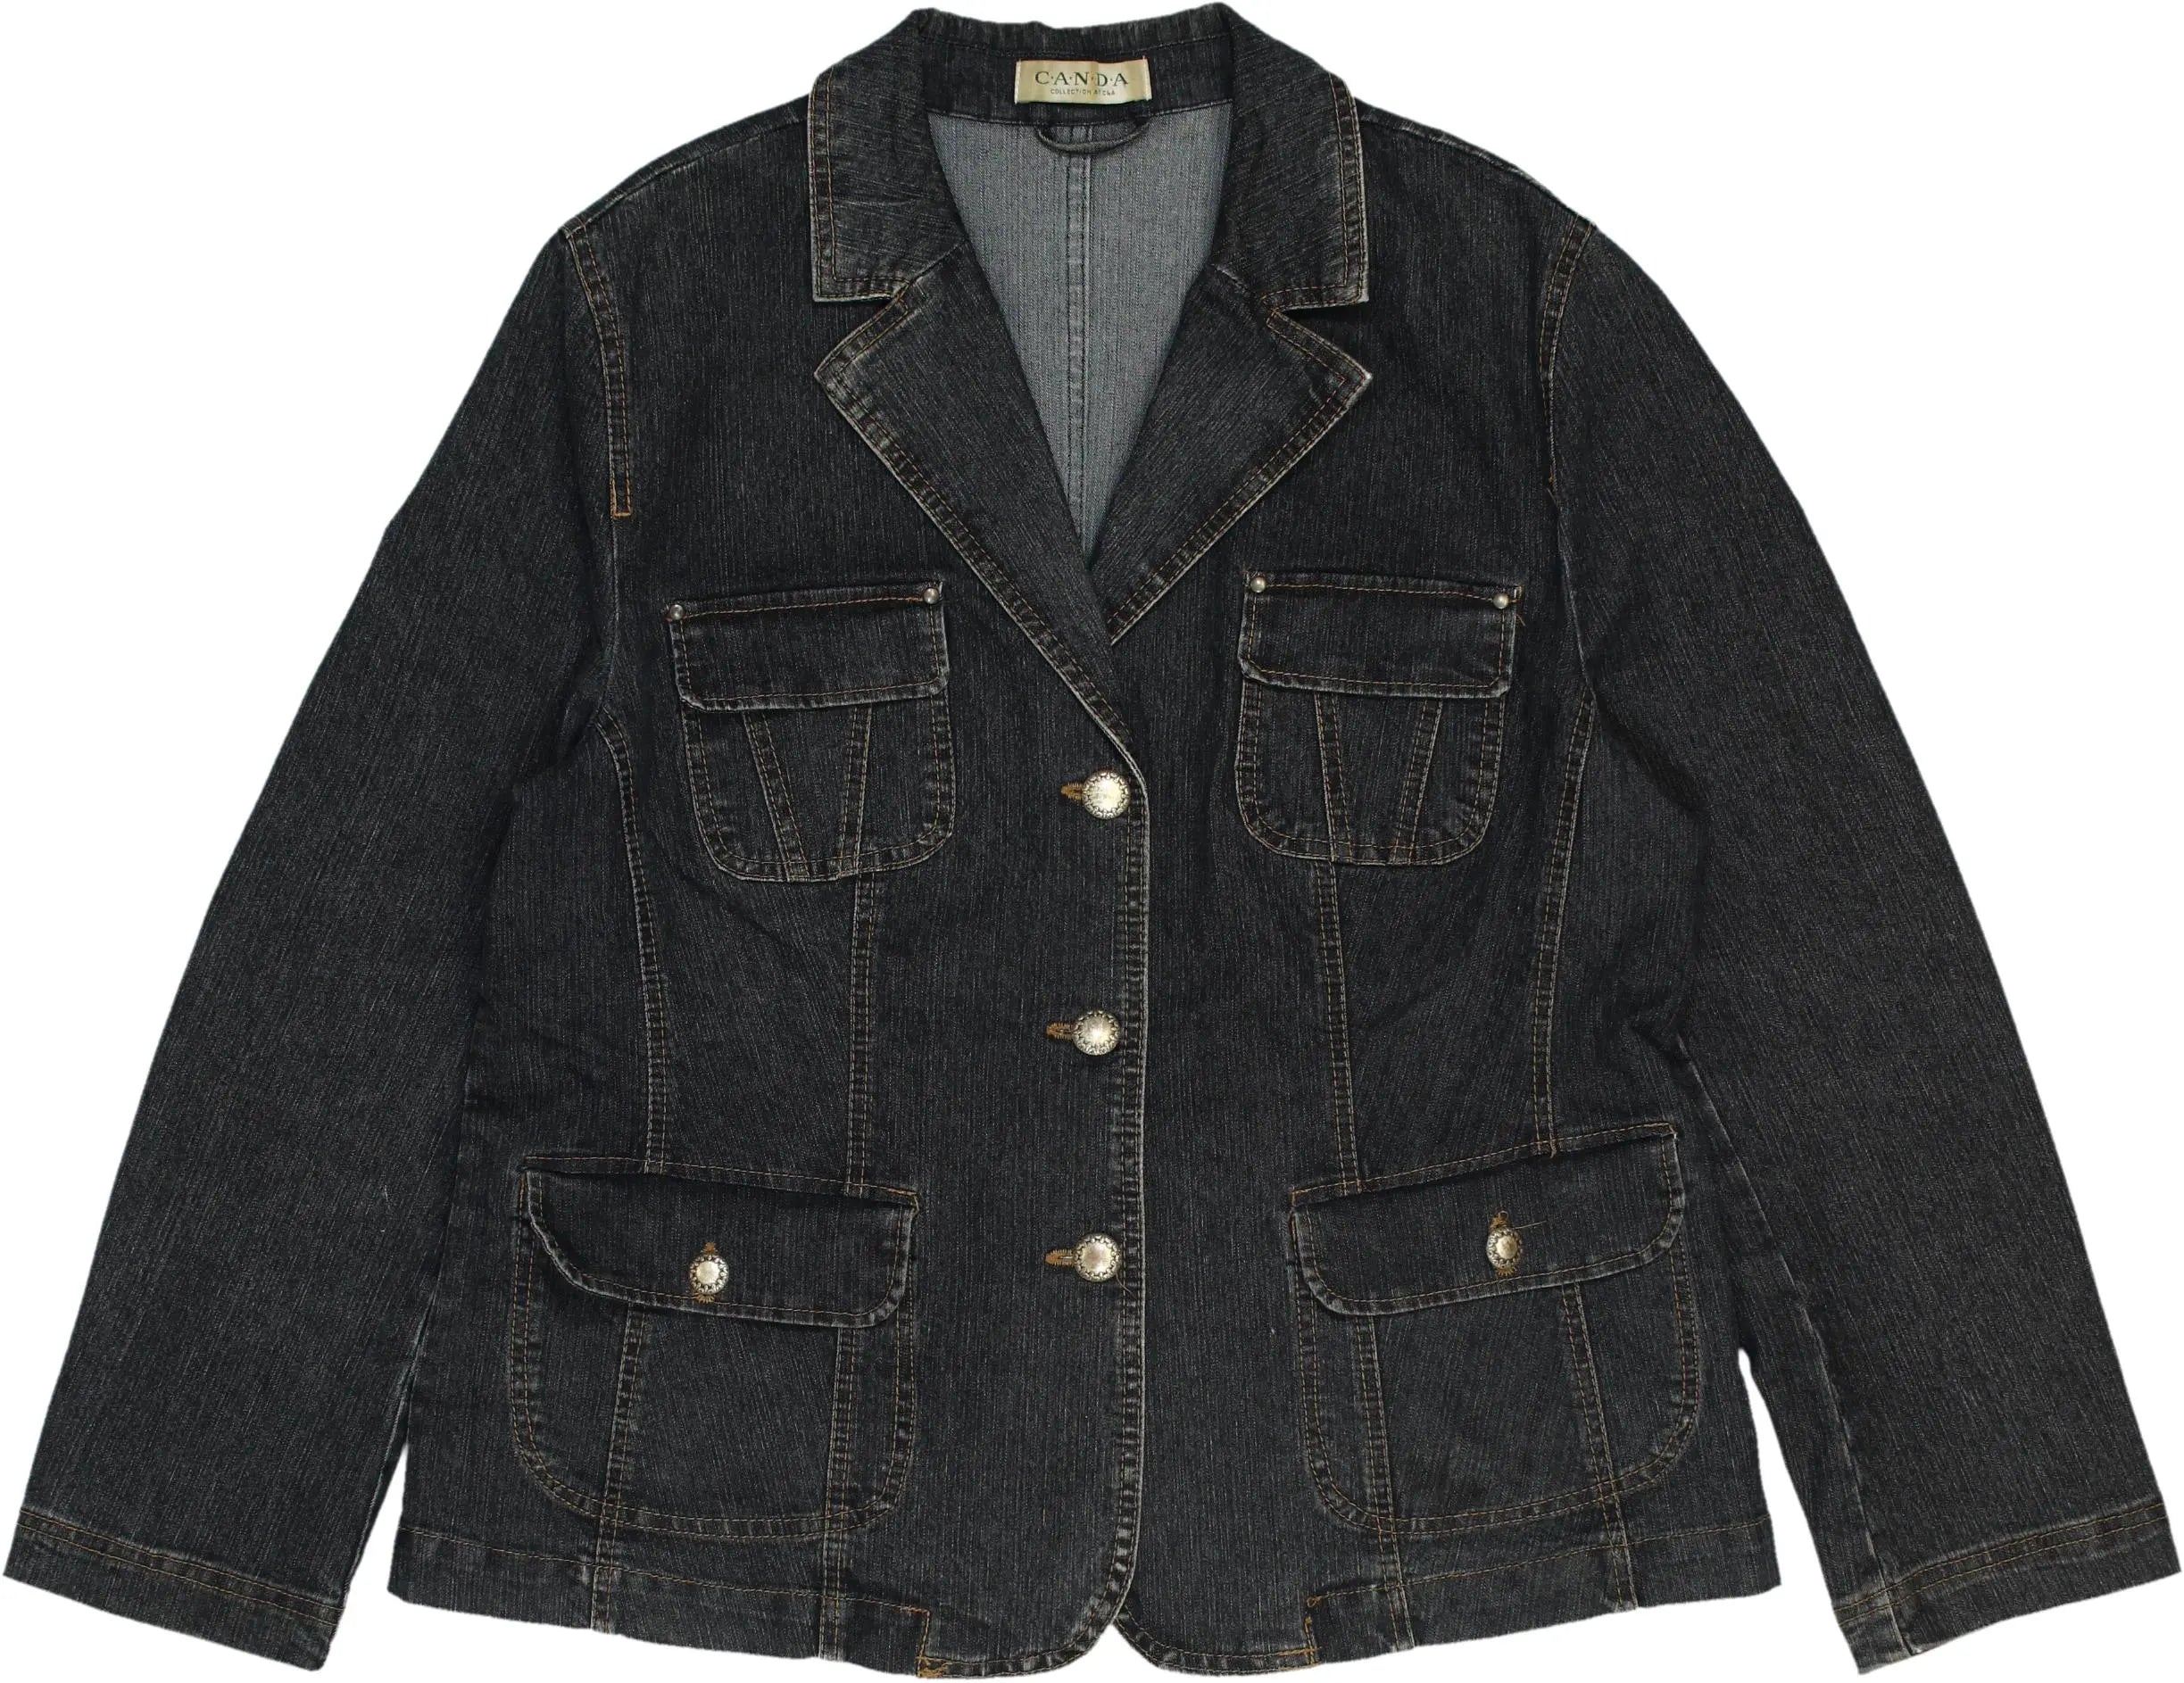 C&A - Denim Jacket- ThriftTale.com - Vintage and second handclothing